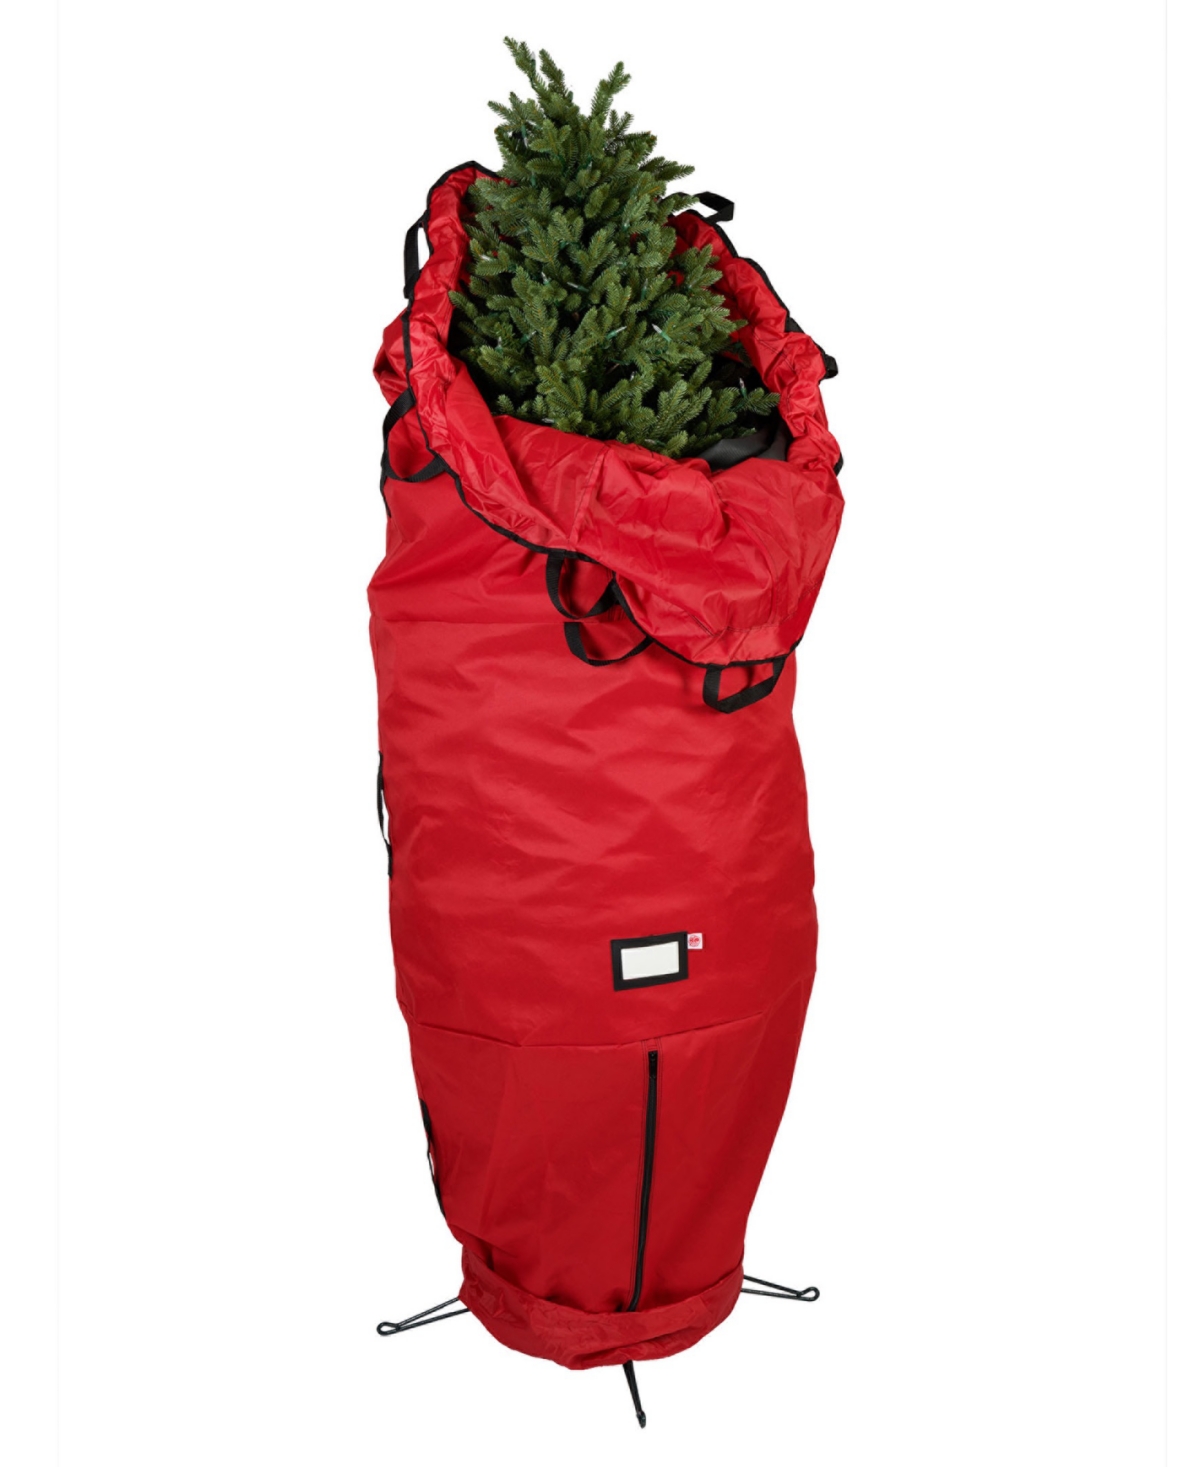 Upright Christmas Tree Storage Bag, 7'-9' trees - Red